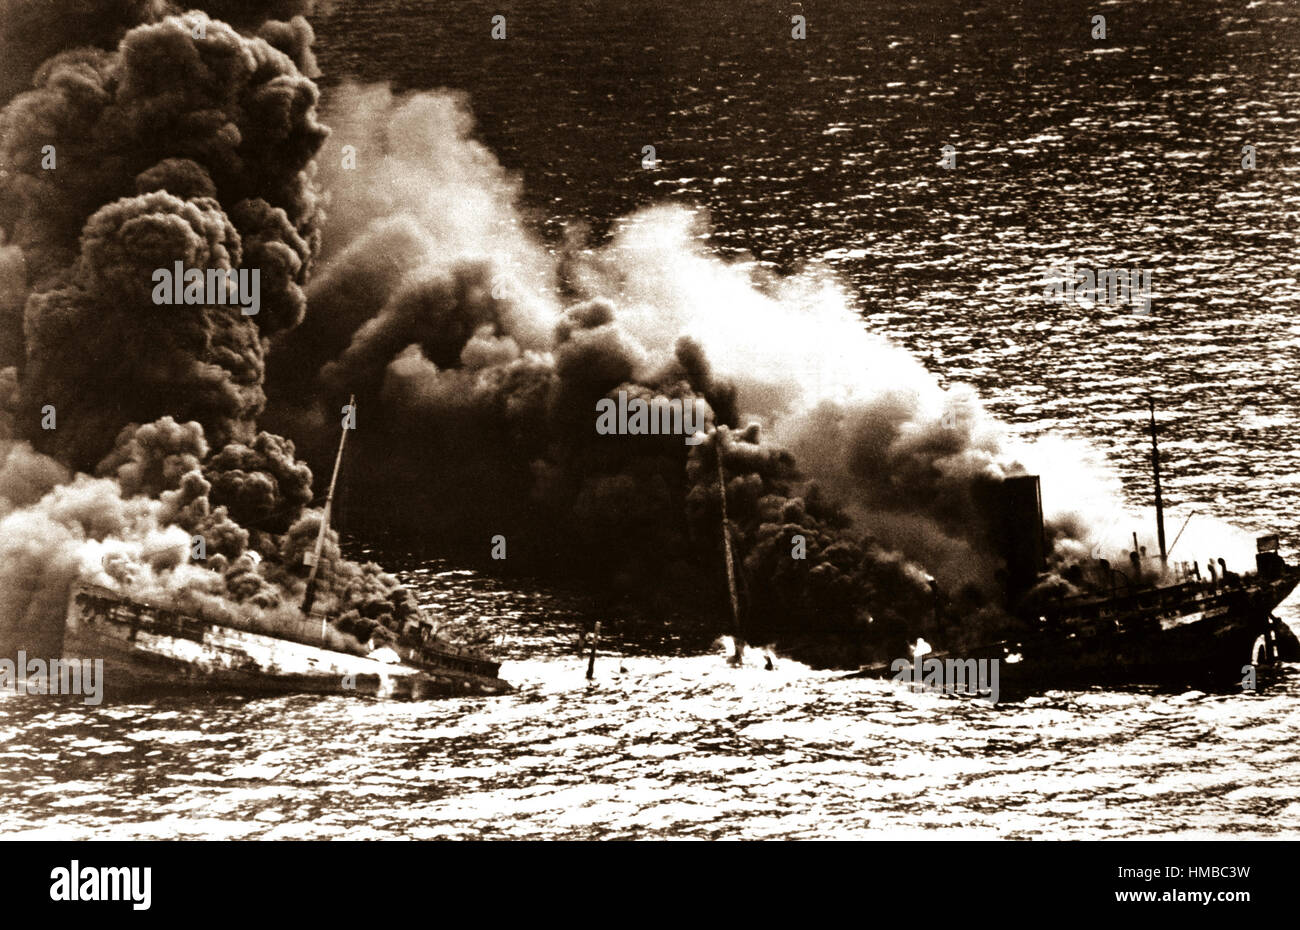 Allied tanker torpedoed in Atlantic Ocean by German submarine.  Ship crumbling amidship under heat of fire, settles toward bottom of ocean.  1942.  (Navy) Stock Photo